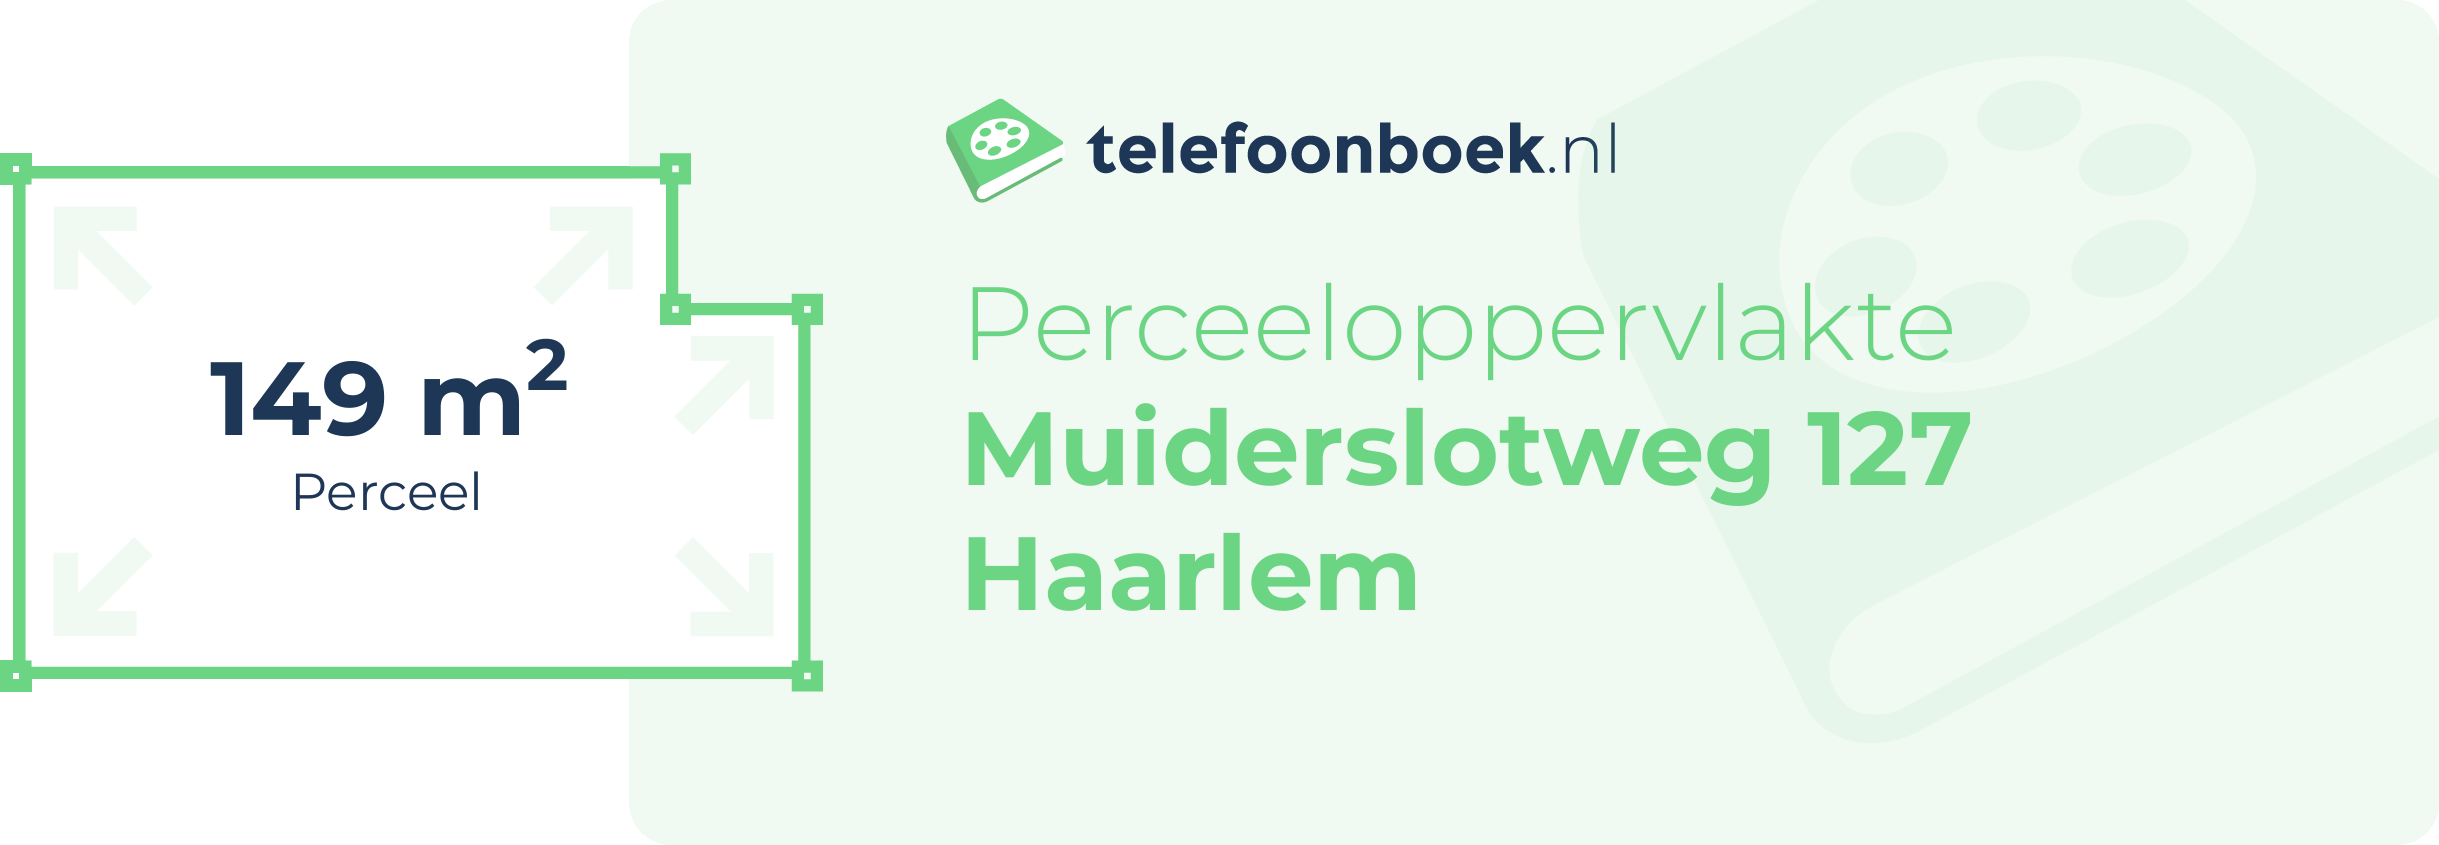 Perceeloppervlakte Muiderslotweg 127 Haarlem